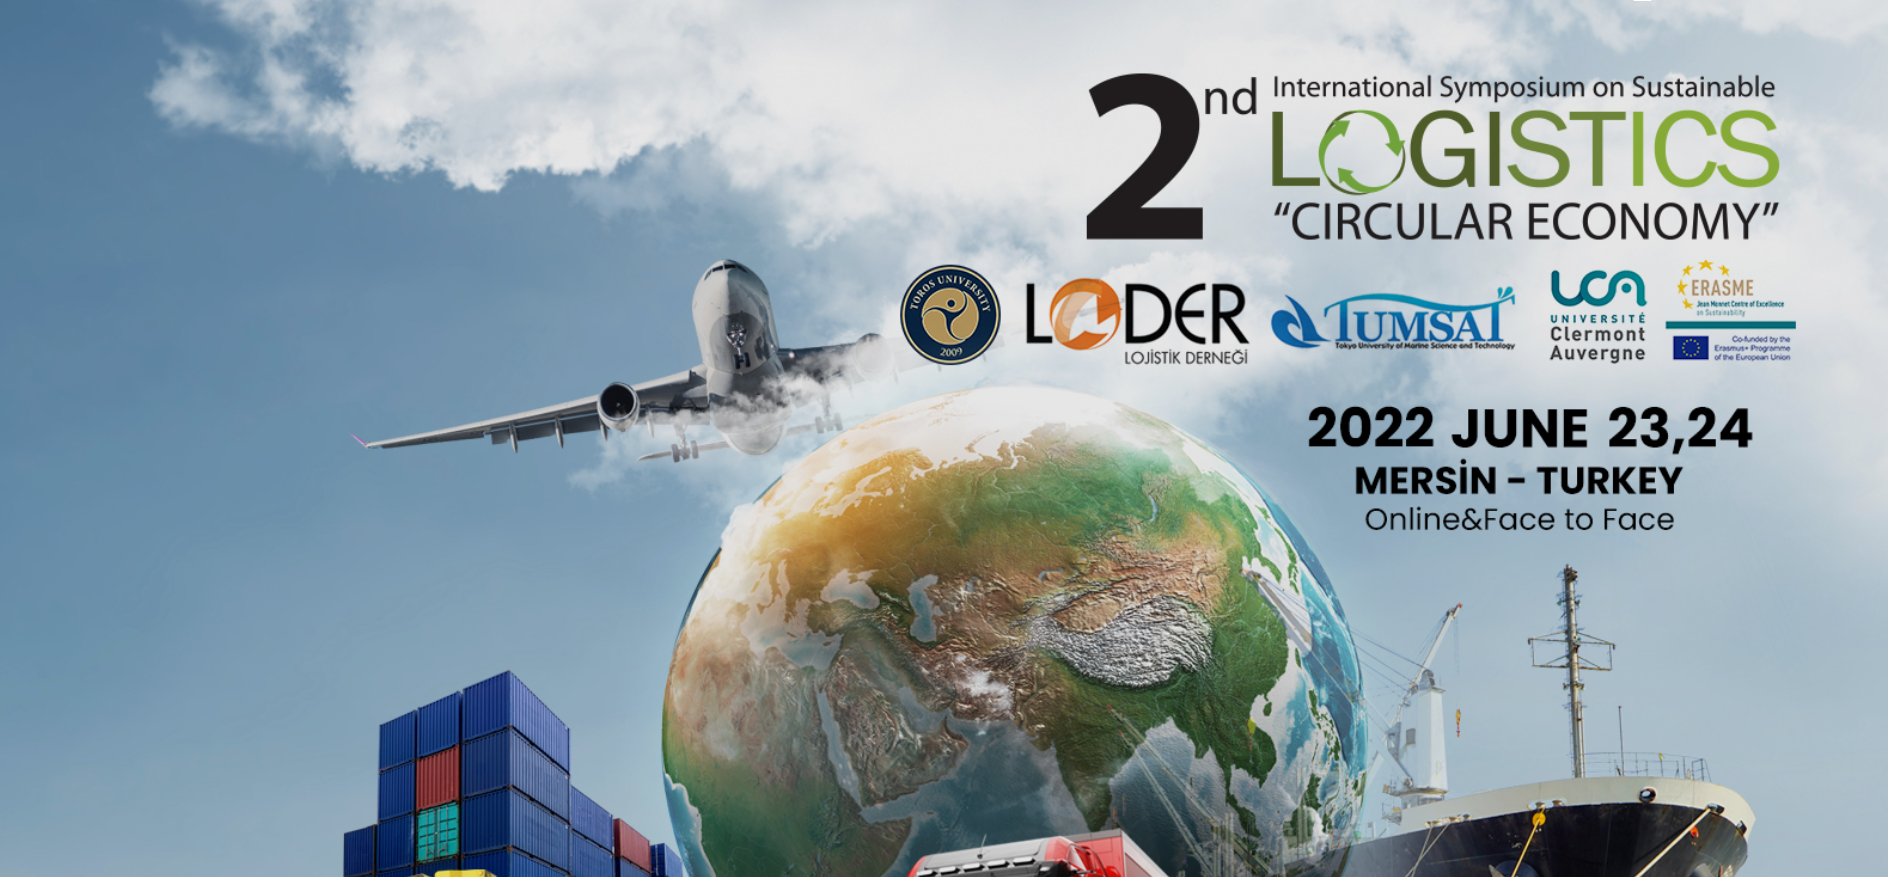 The International Symposium on Sustainable Logistics  and Circular Economy